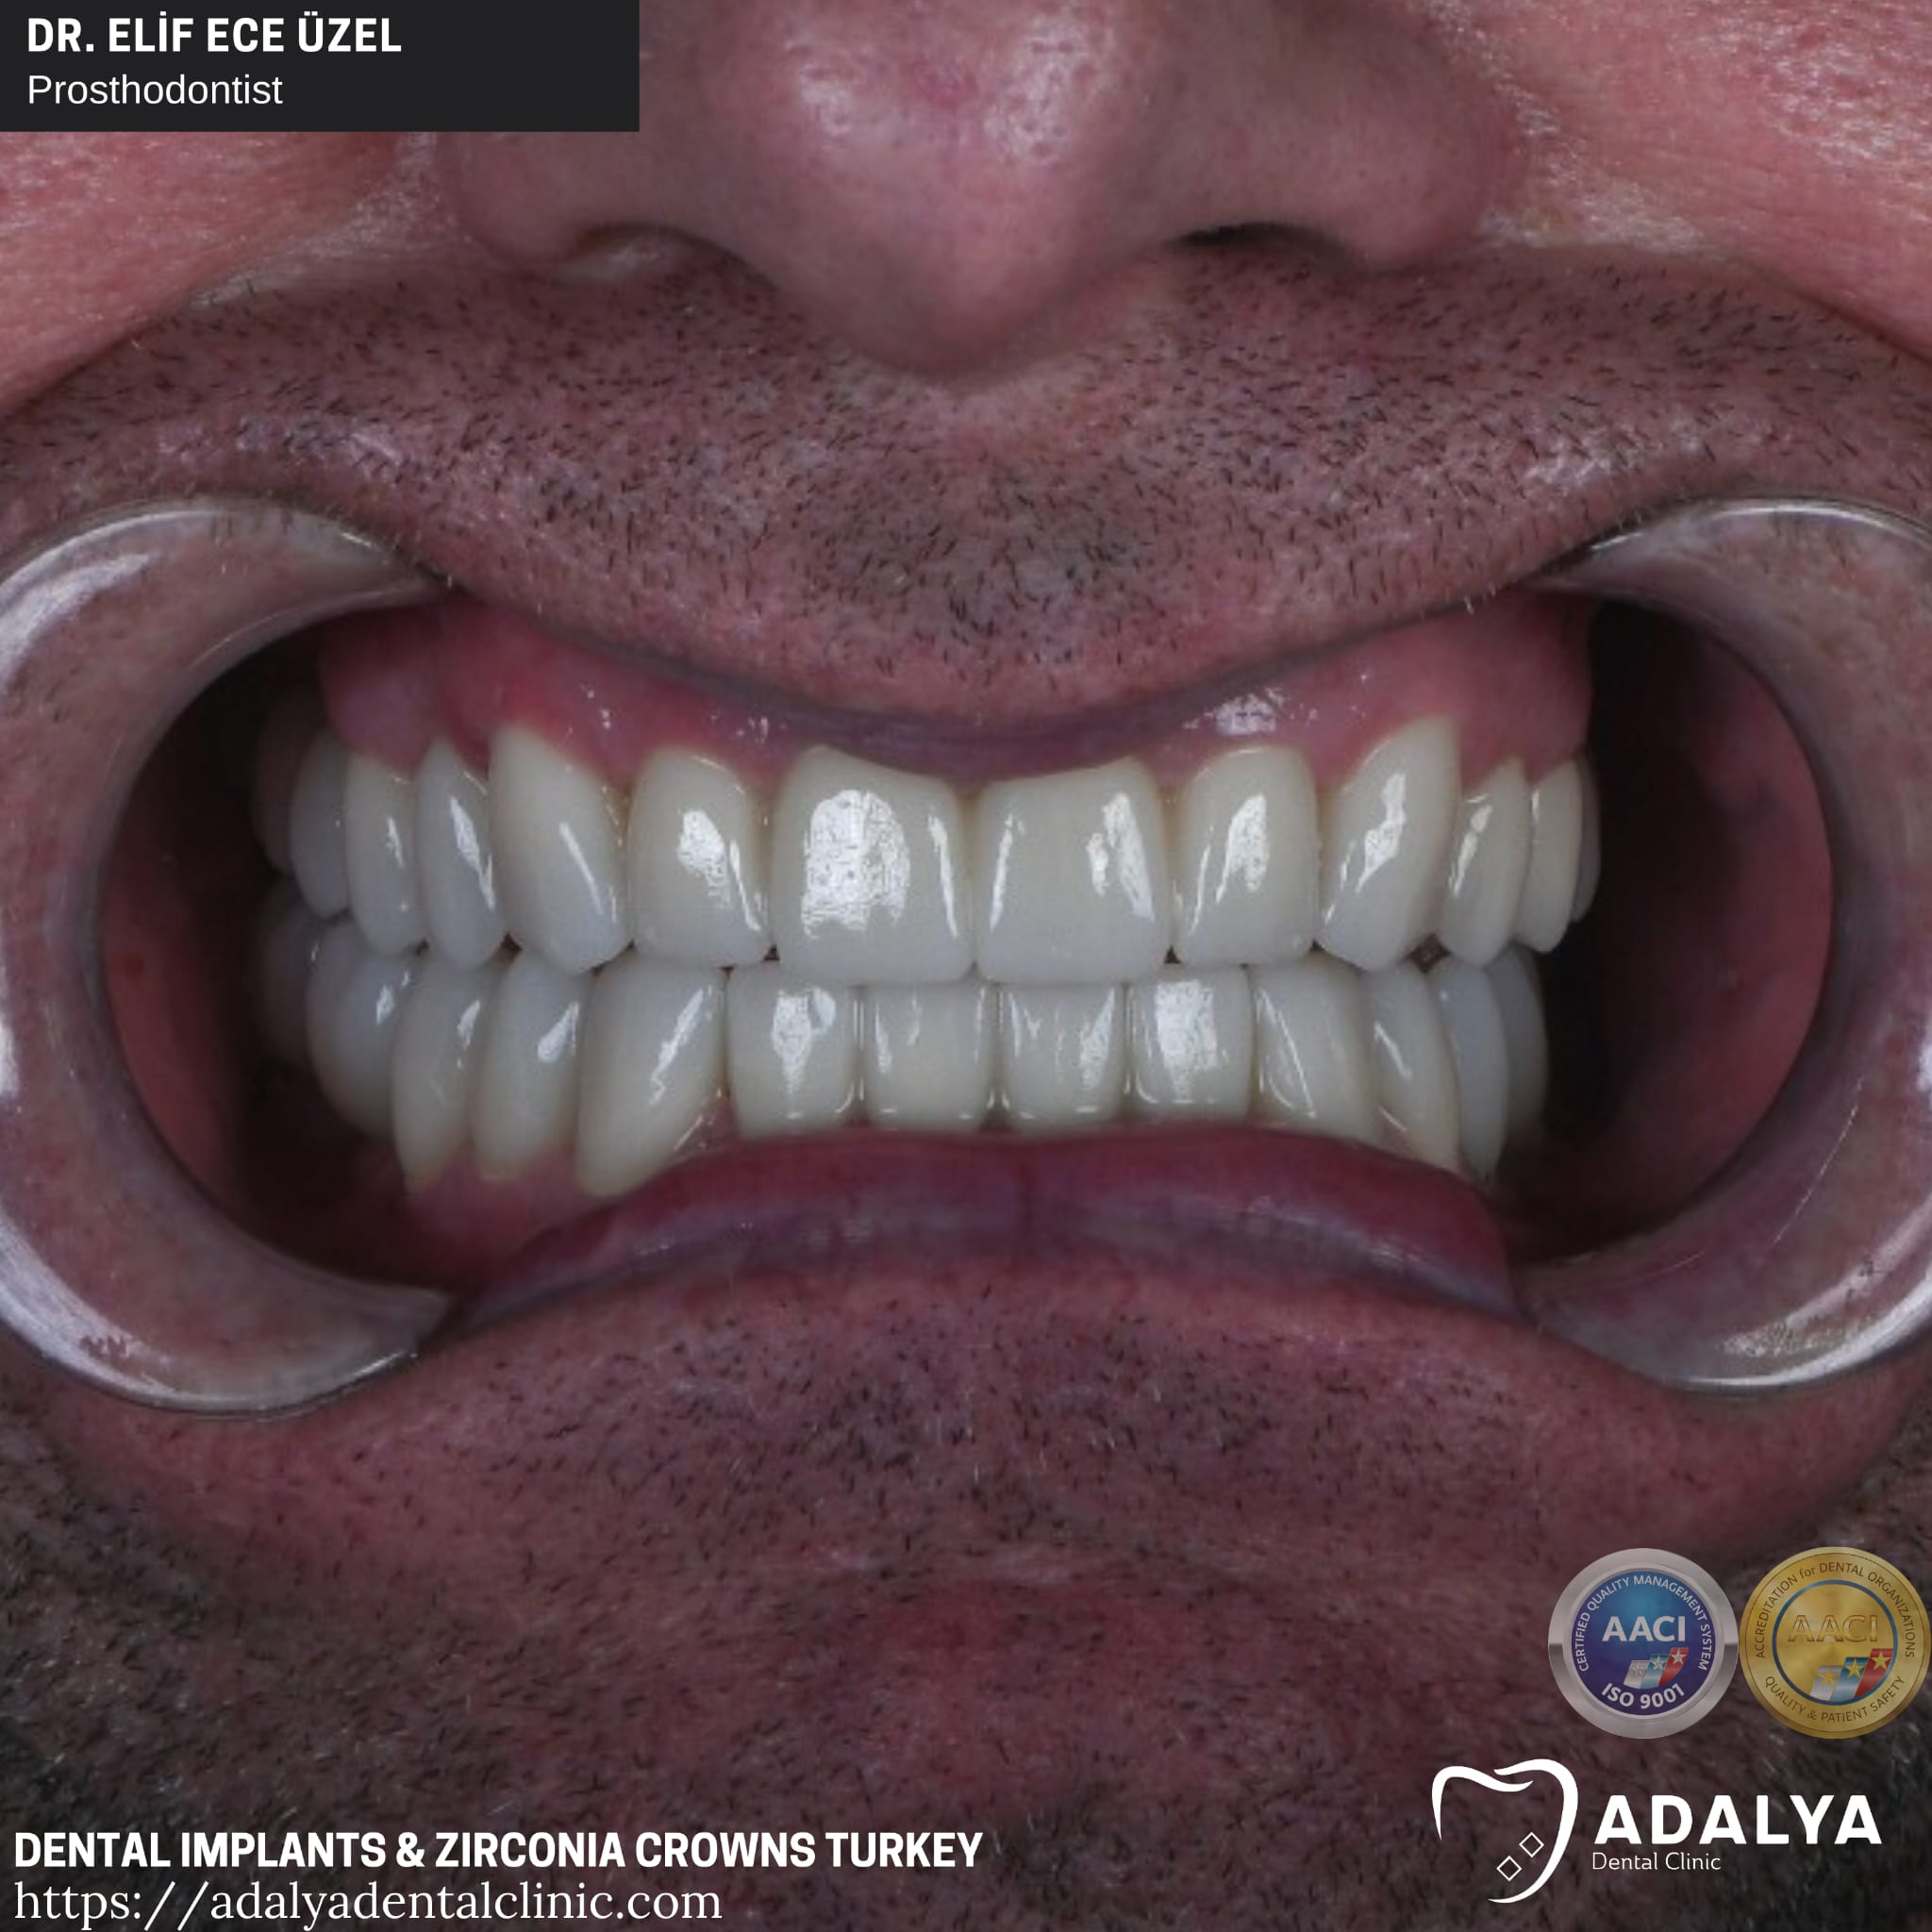 zirconium crowns dental implants turkey antalya packages prices